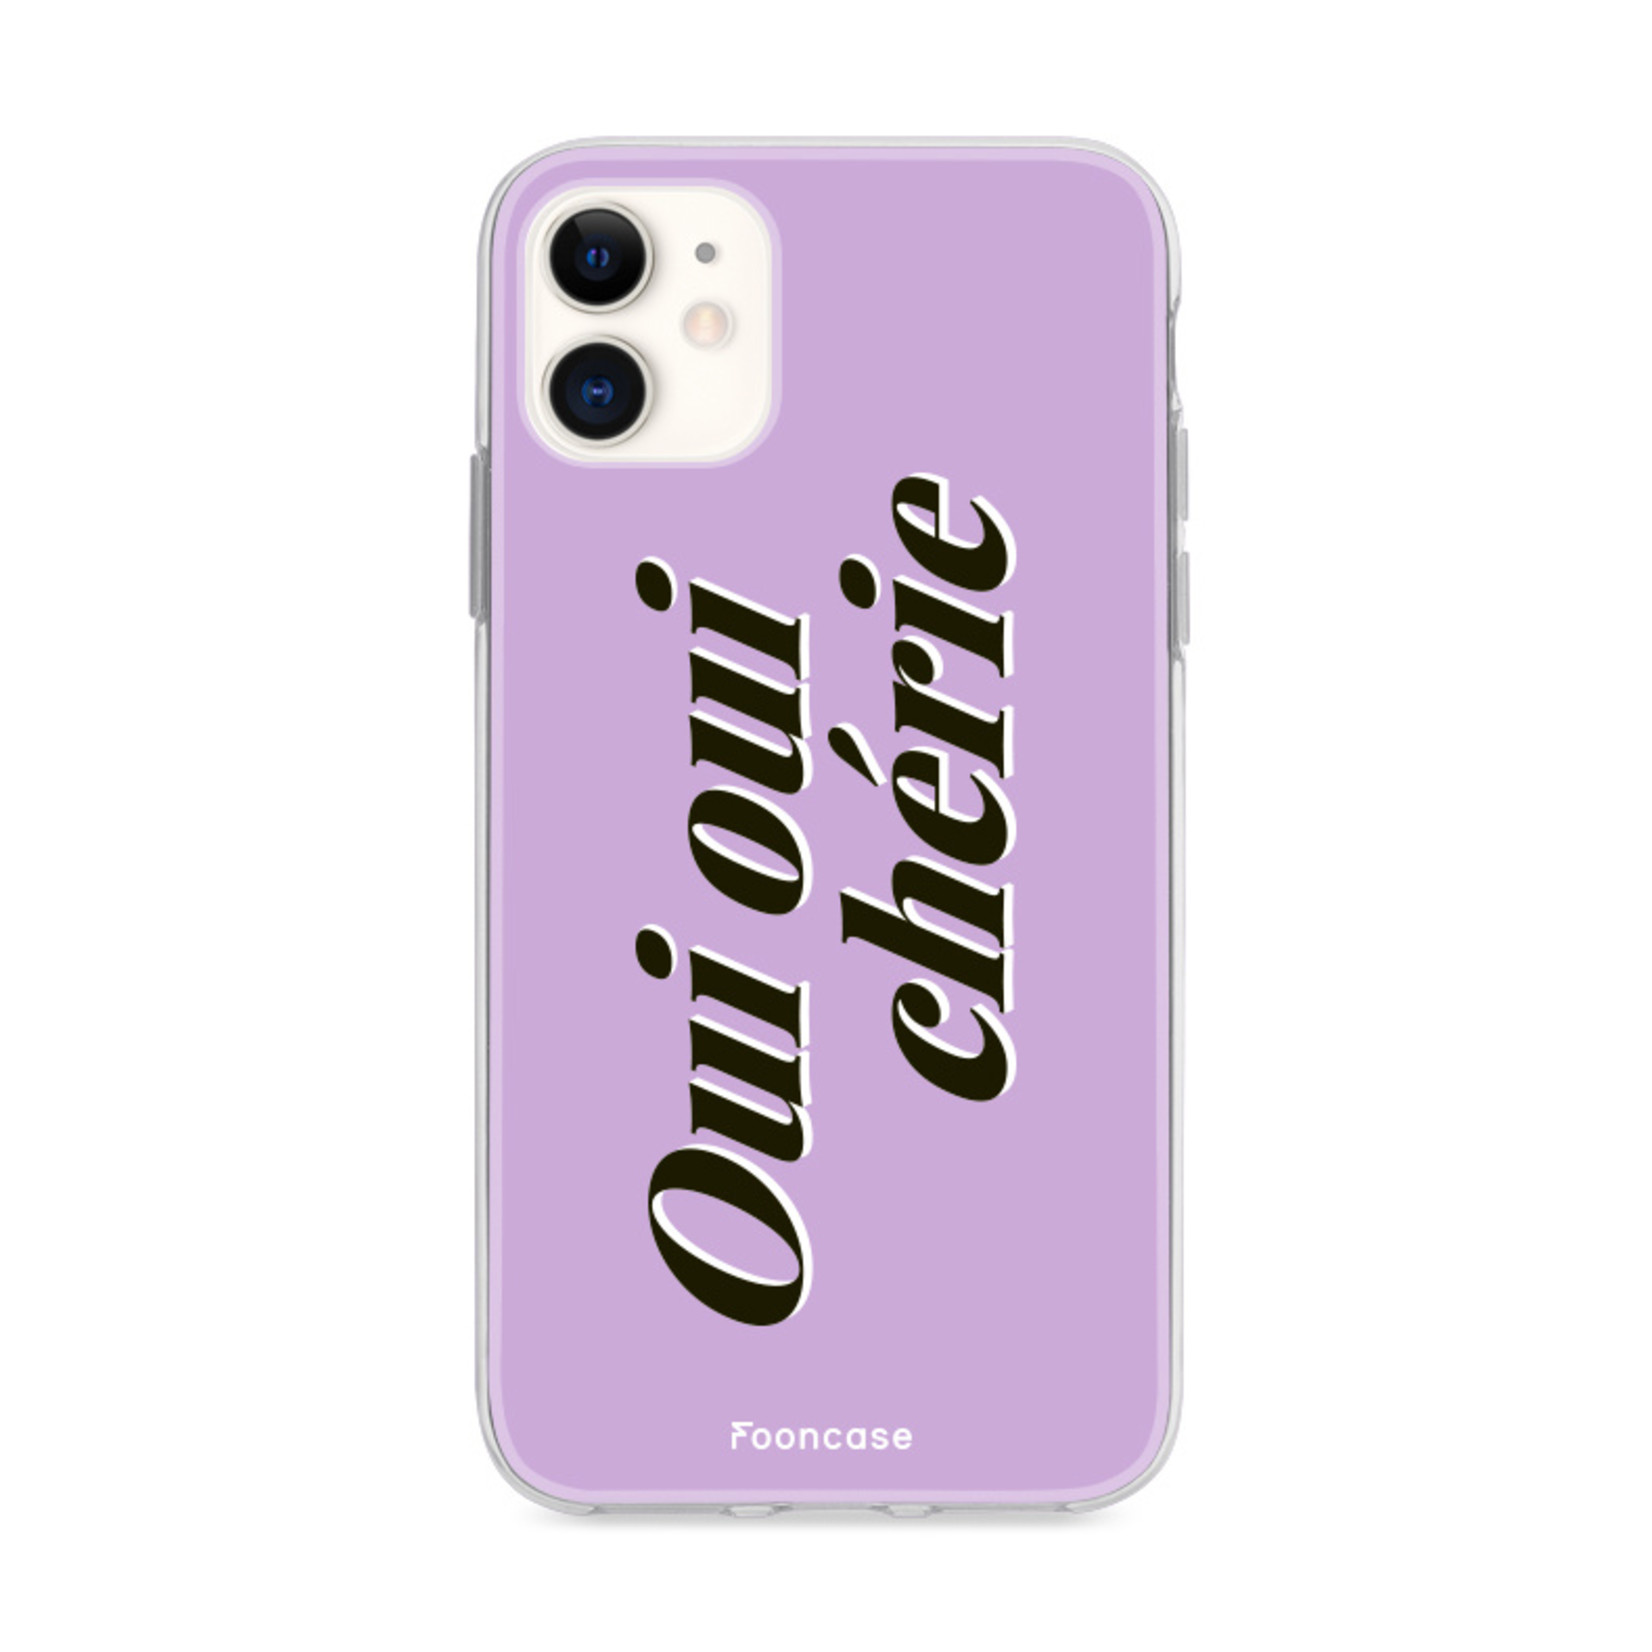 FOONCASE Iphone 11 Case - Oui Oui Chérie